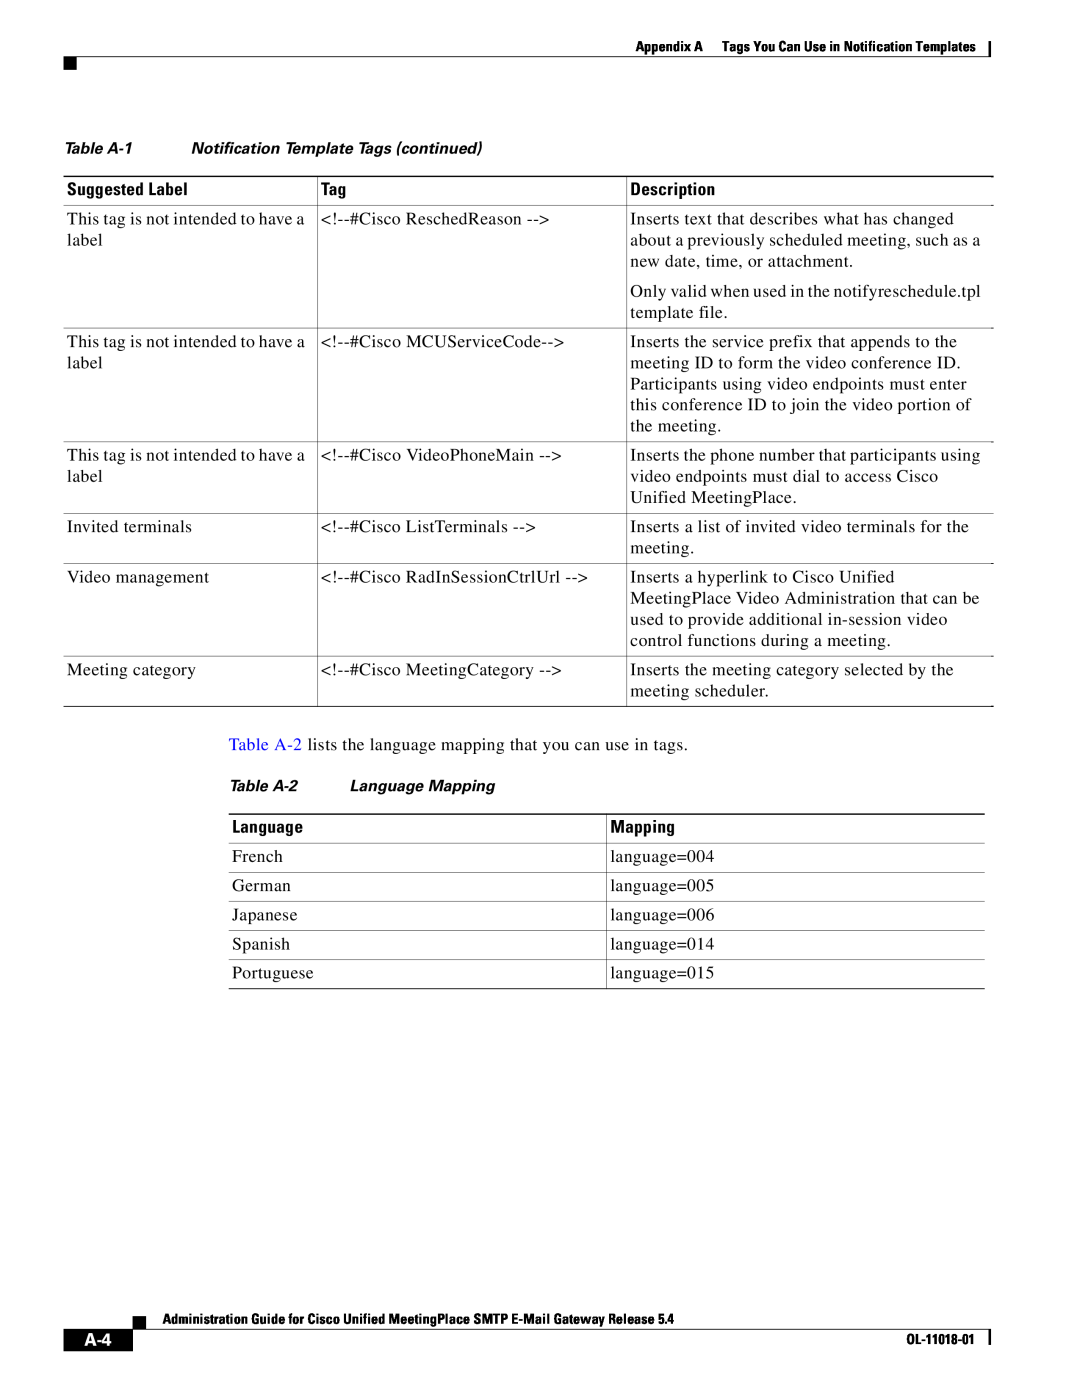 Cisco Systems SMTP manual Description, Language, Mapping 